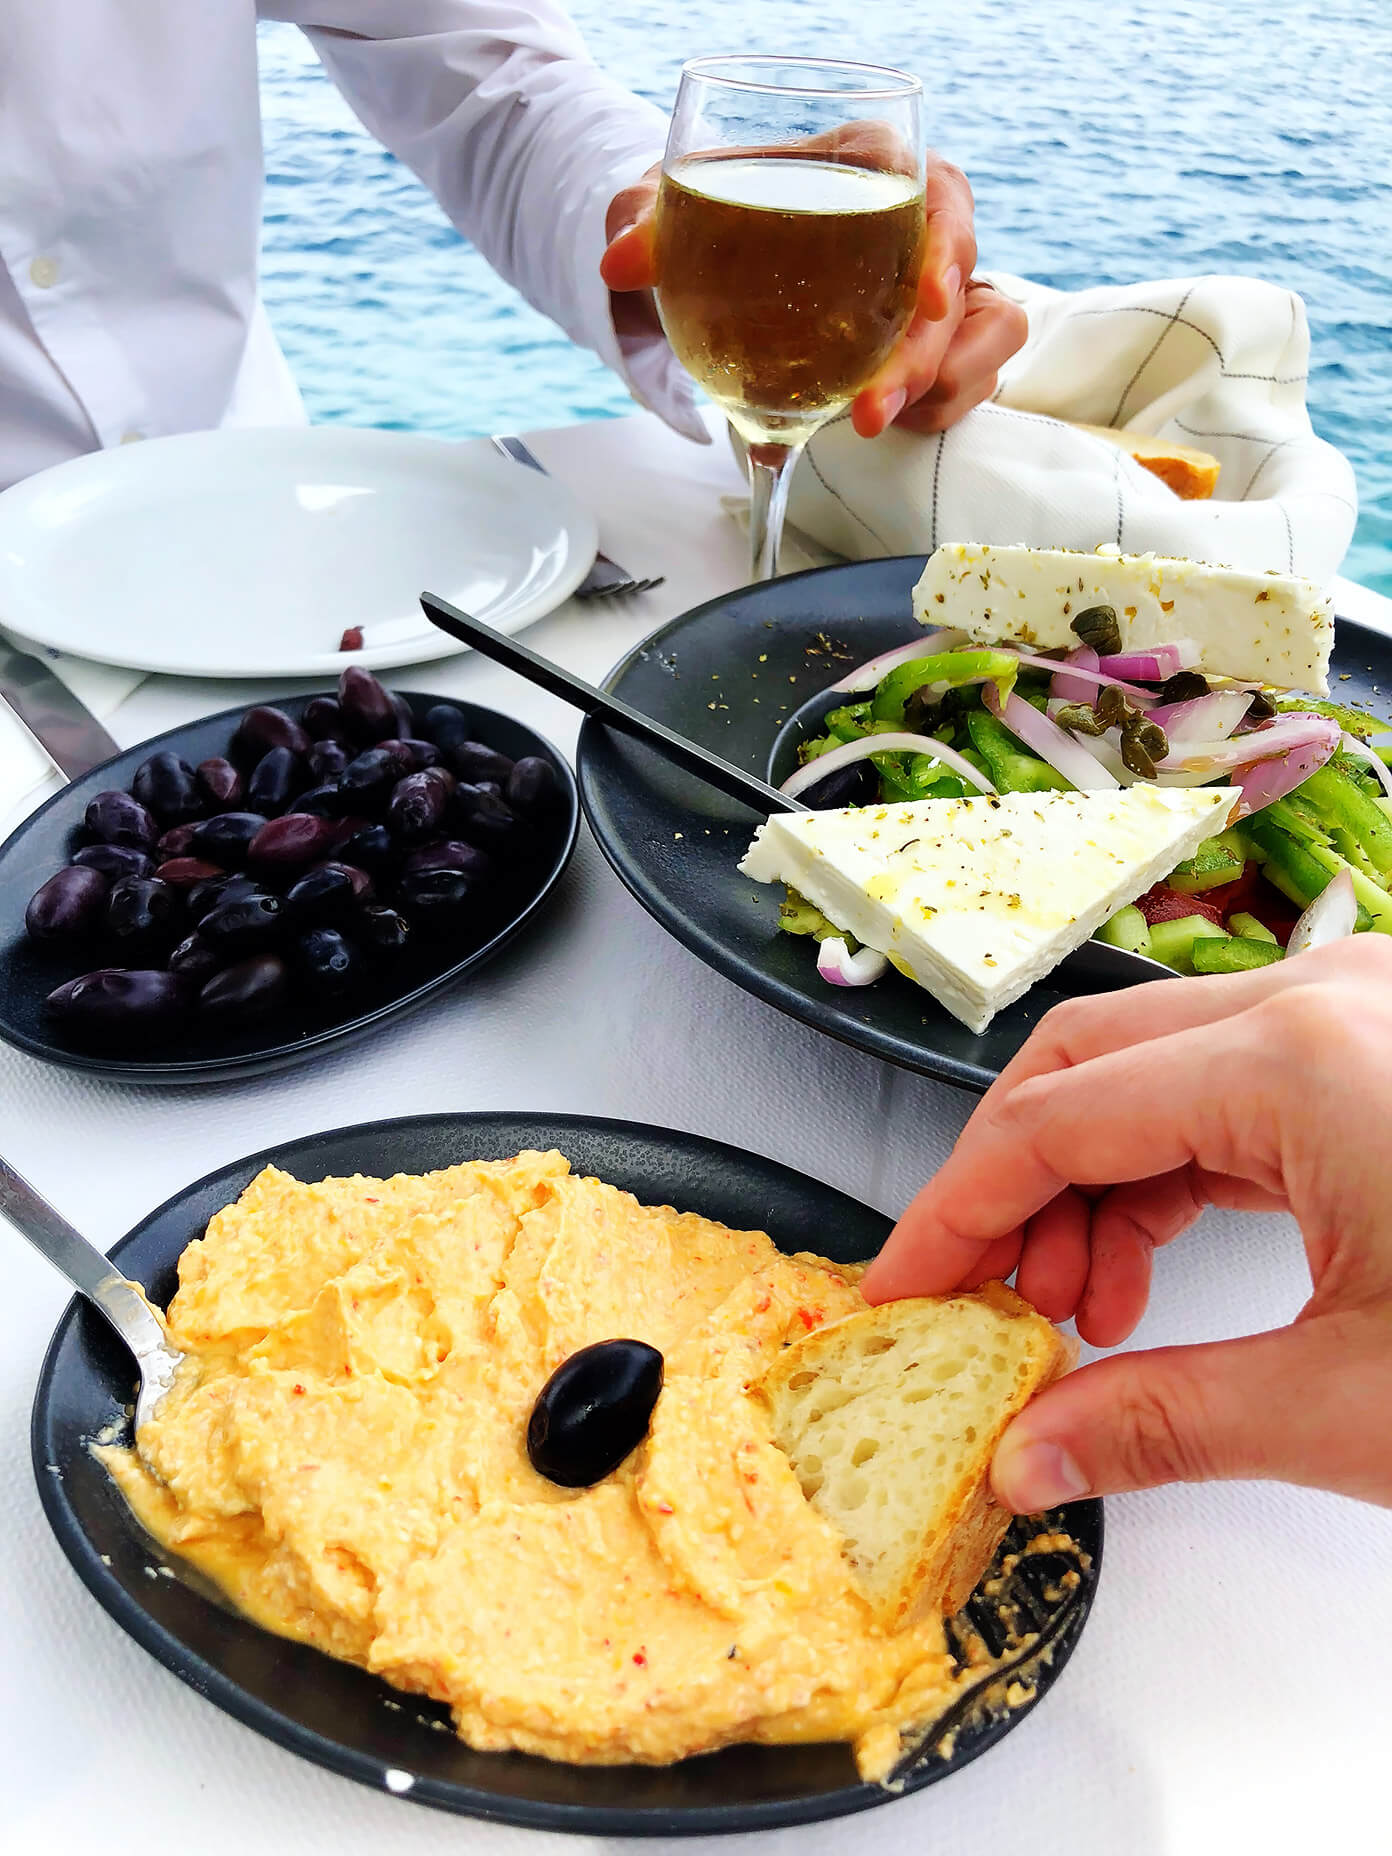 ÎÏÎ¿ÏÎ­Î»ÎµÏÎ¼Î± ÎµÎ¹ÎºÏÎ½Î±Ï Î³Î¹Î± greek feta cheese